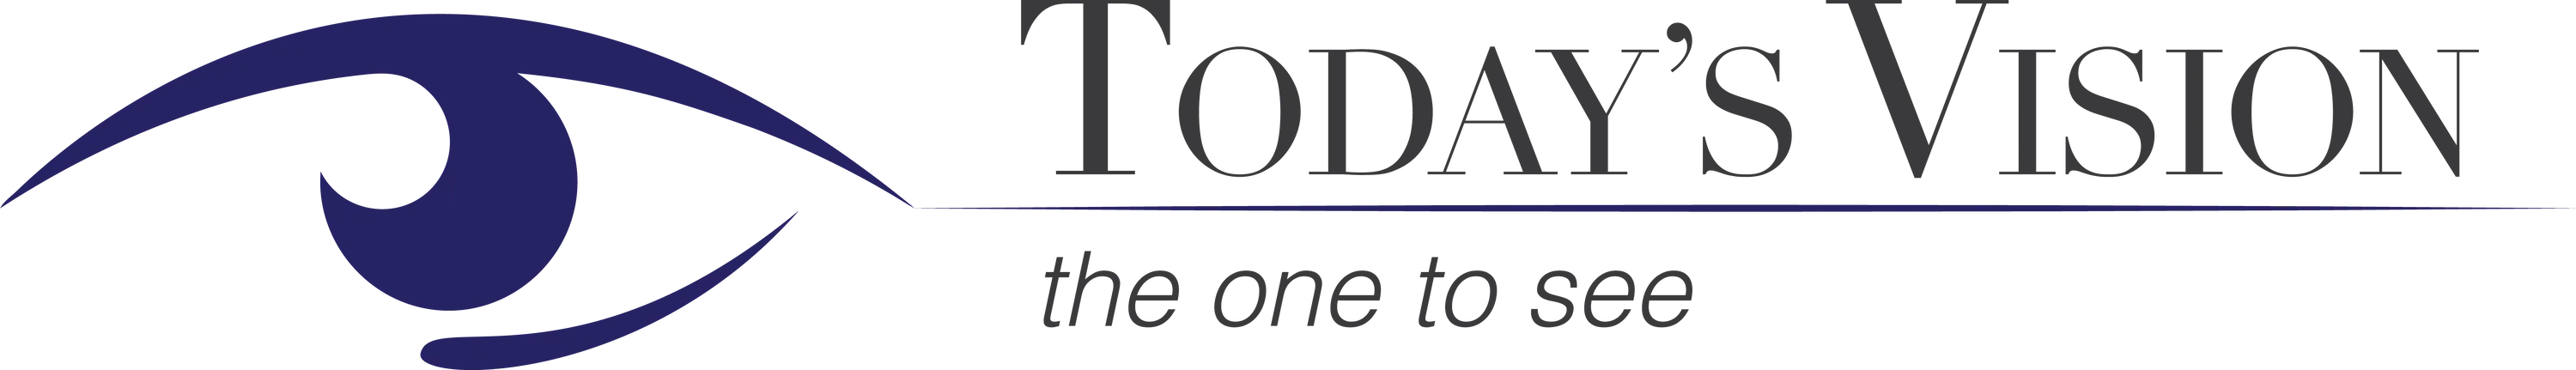 Today's Vision Conroe logo